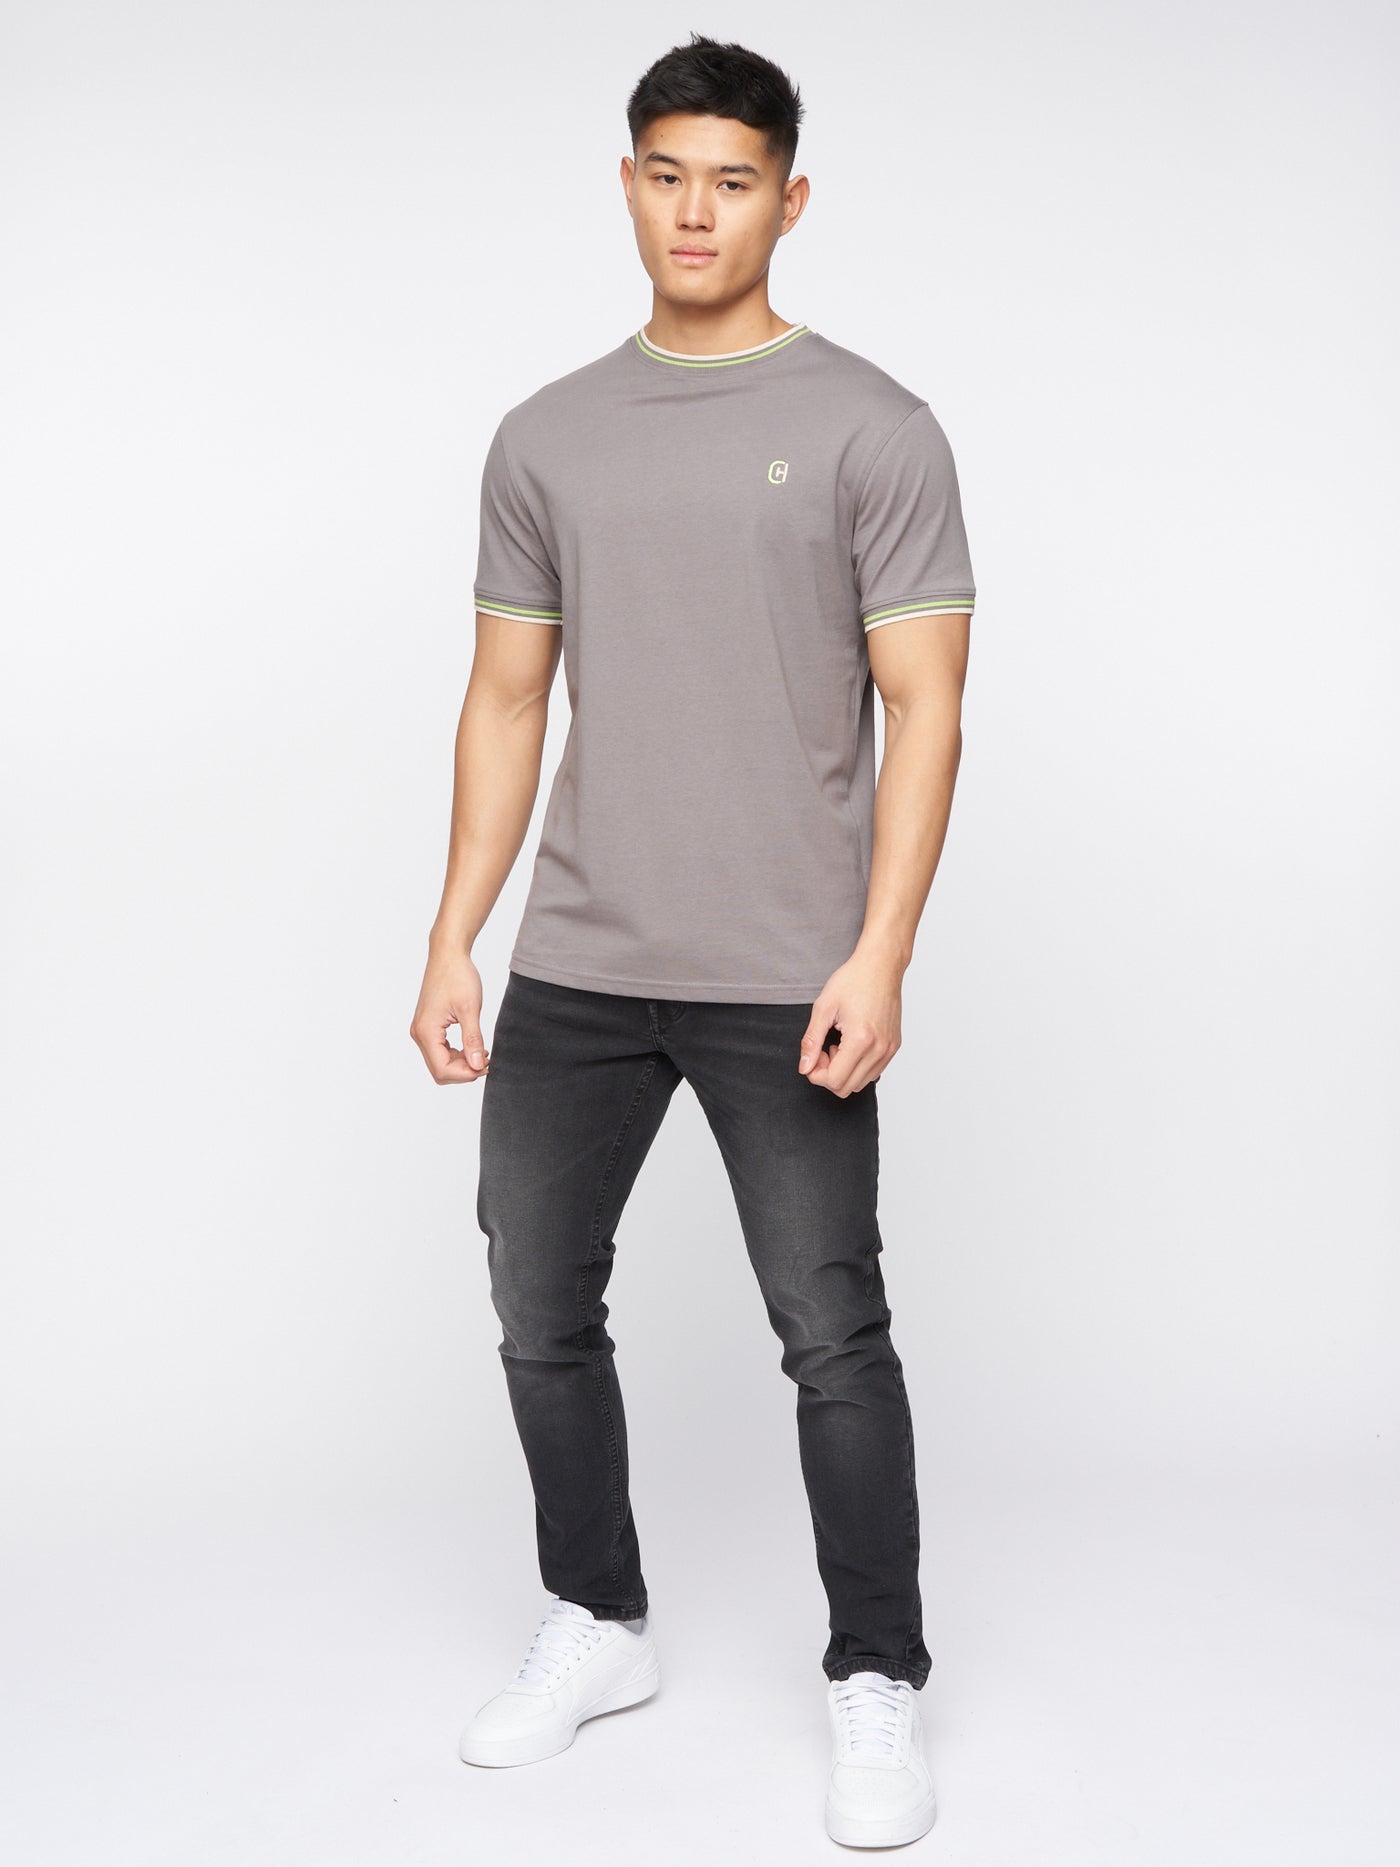 Ordale T-Shirt Grey